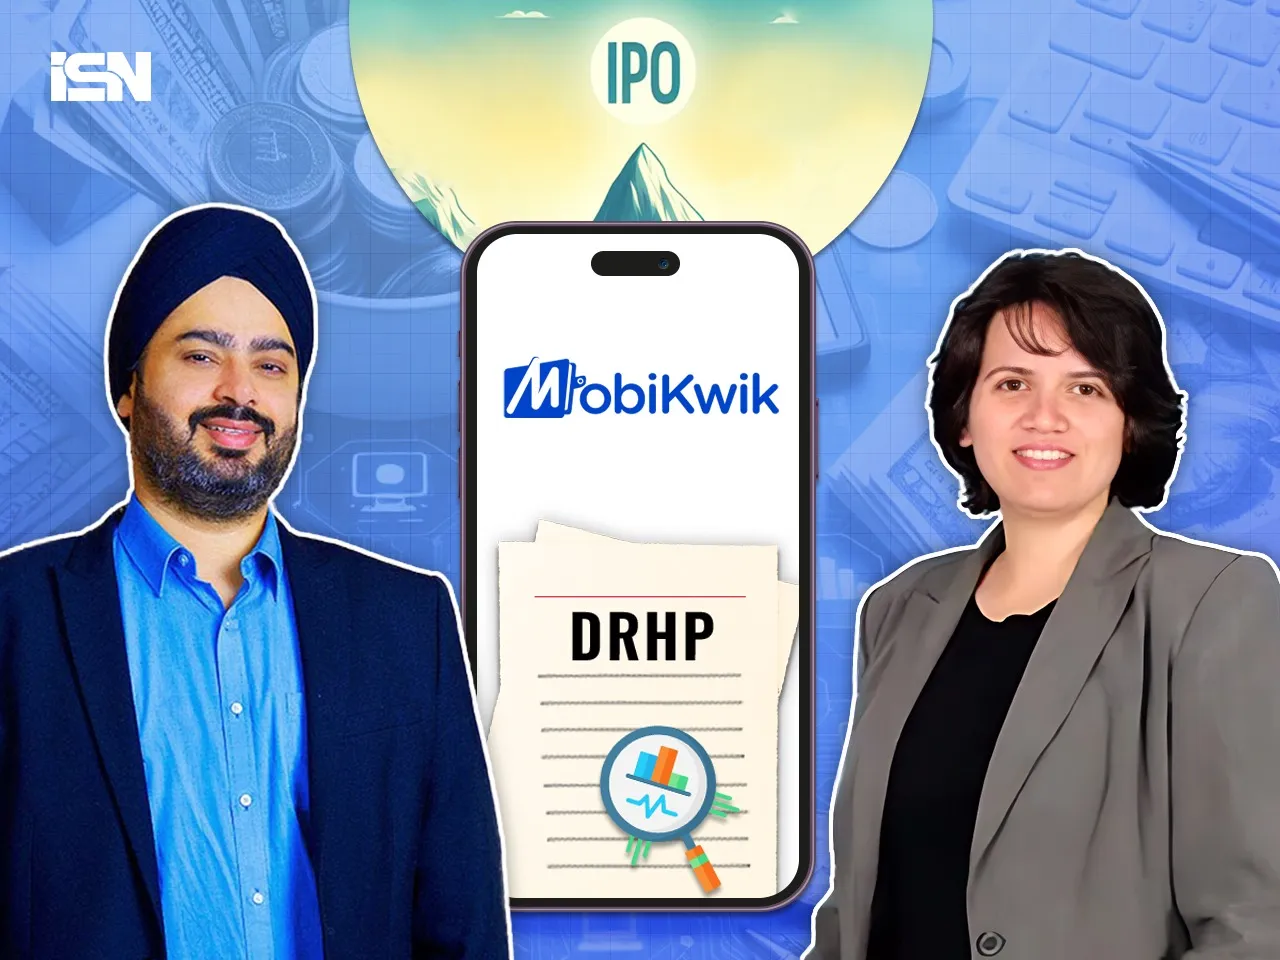 MobiKwik refiles DRHP with SEBI to raise Rs 700 crore via IPO; Here's all you need to know